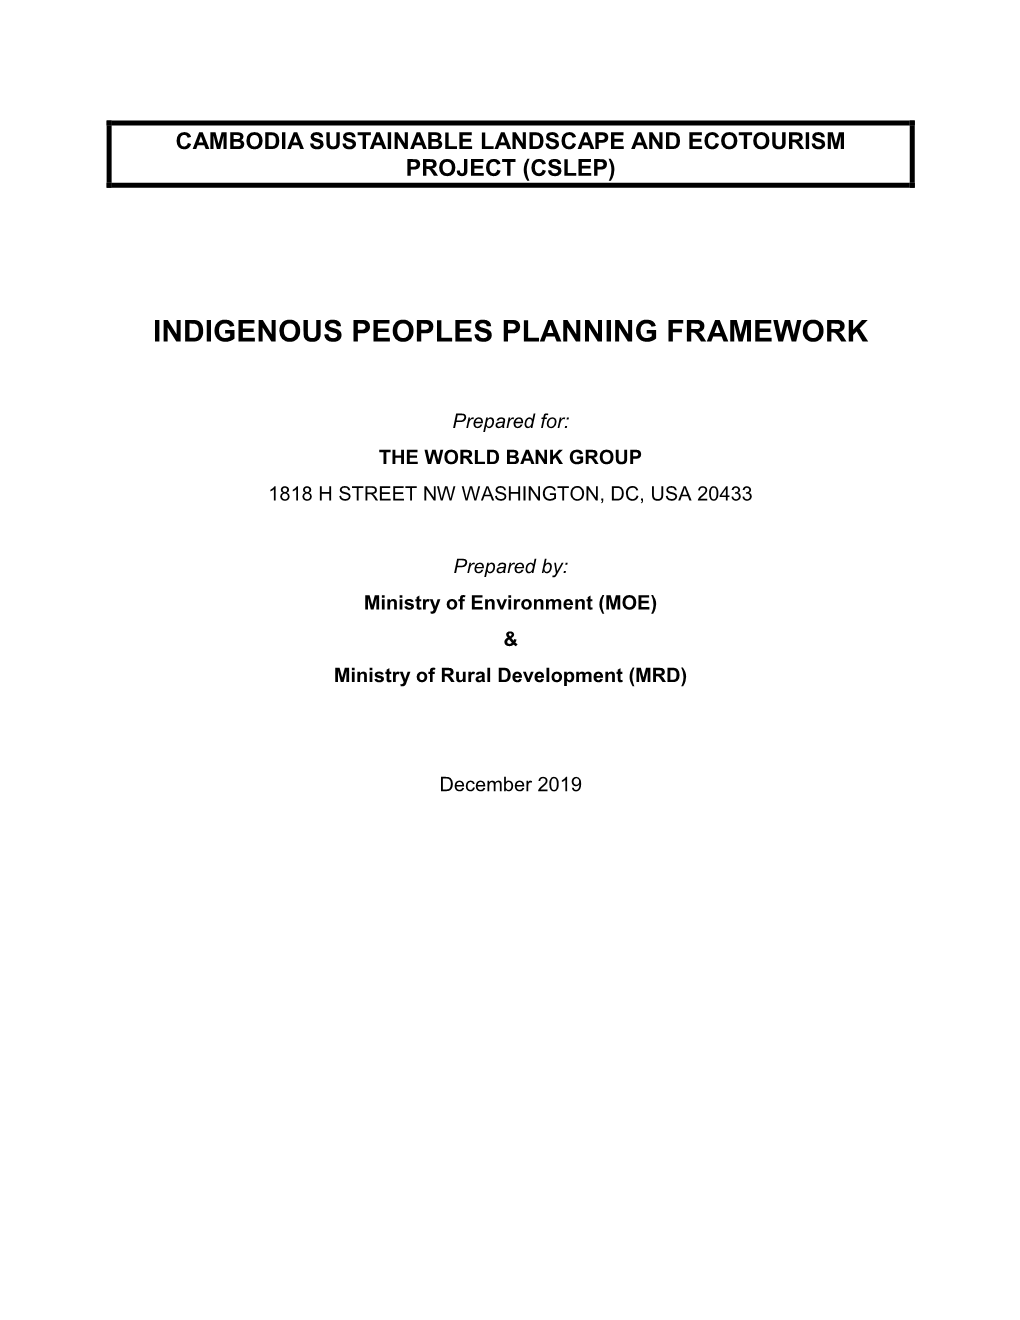 Indigenous Peoples Planning Framework